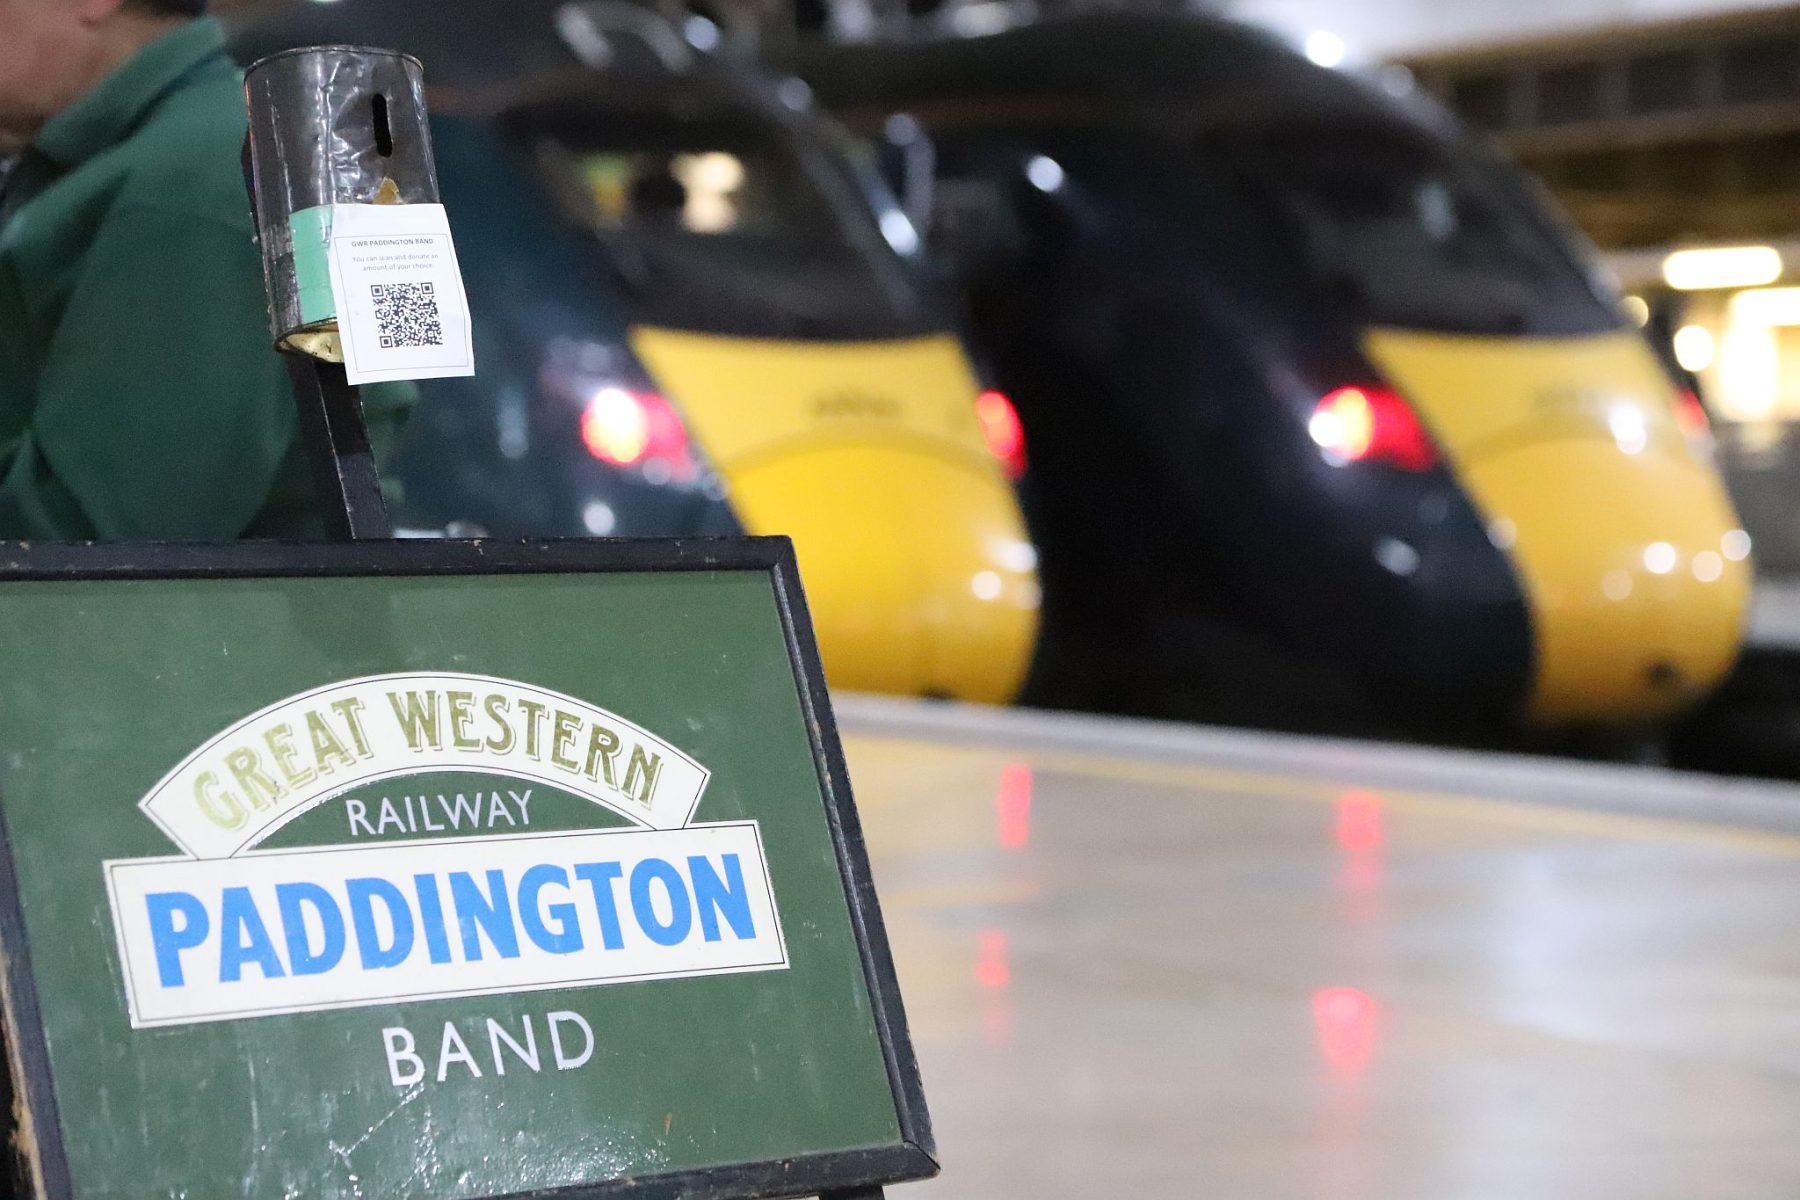 Great Western Railway Paddington Band Friday evening performance at London Paddington Railway Station, 3rd March 2023, 03-Mar-2023